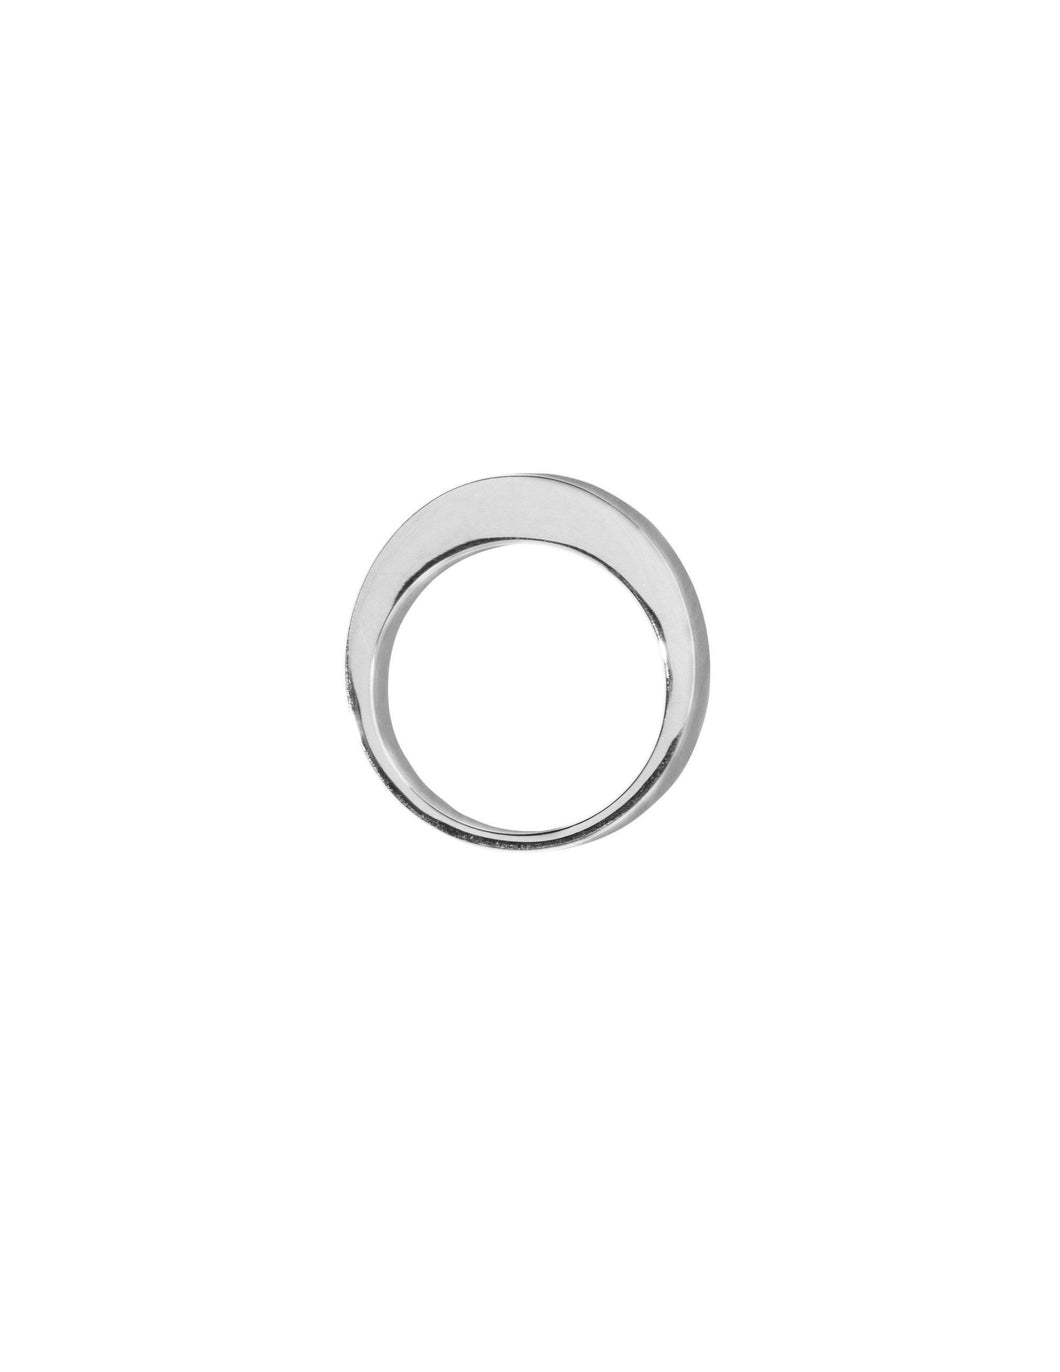 Ozone ring silver